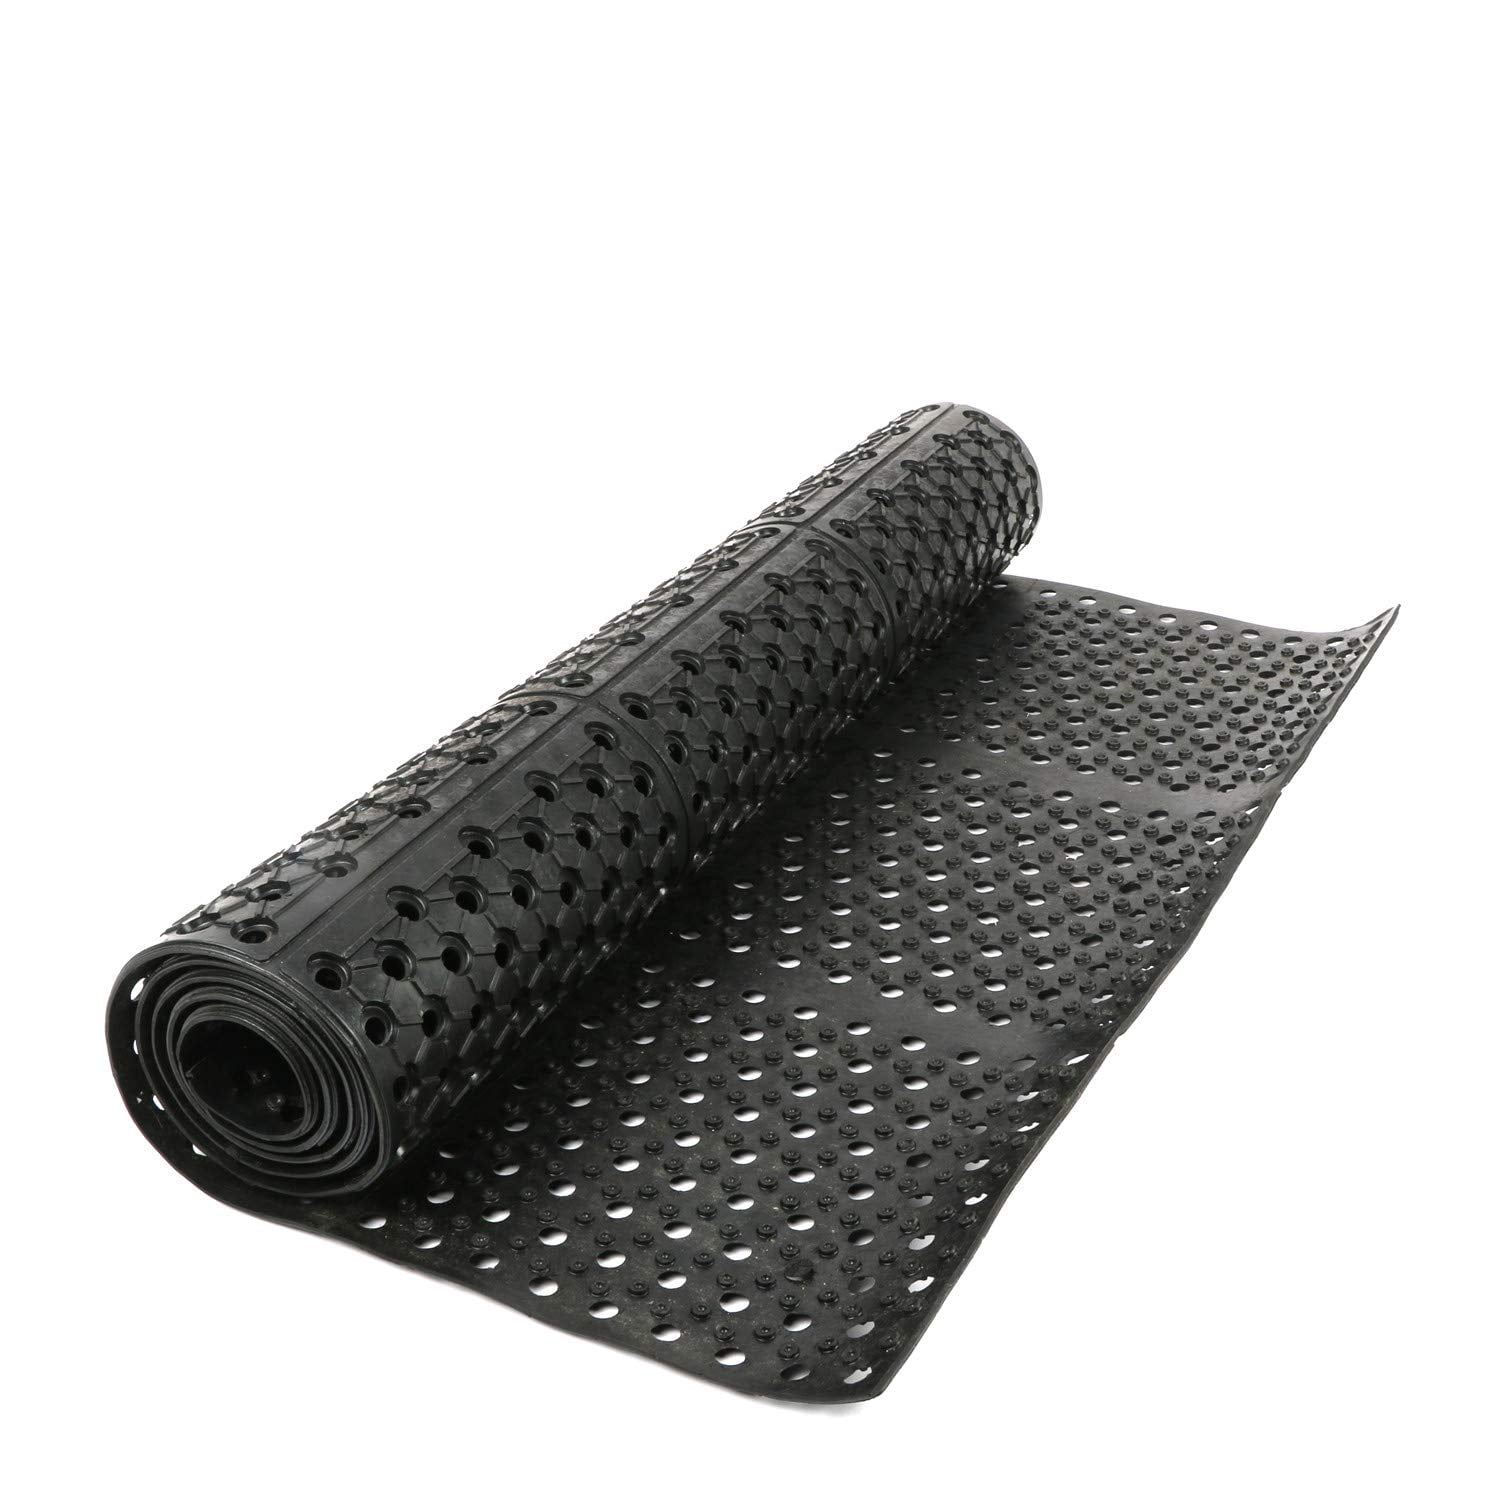 Black Non Slip Floor mat with mini drain holes for Swimming Pool